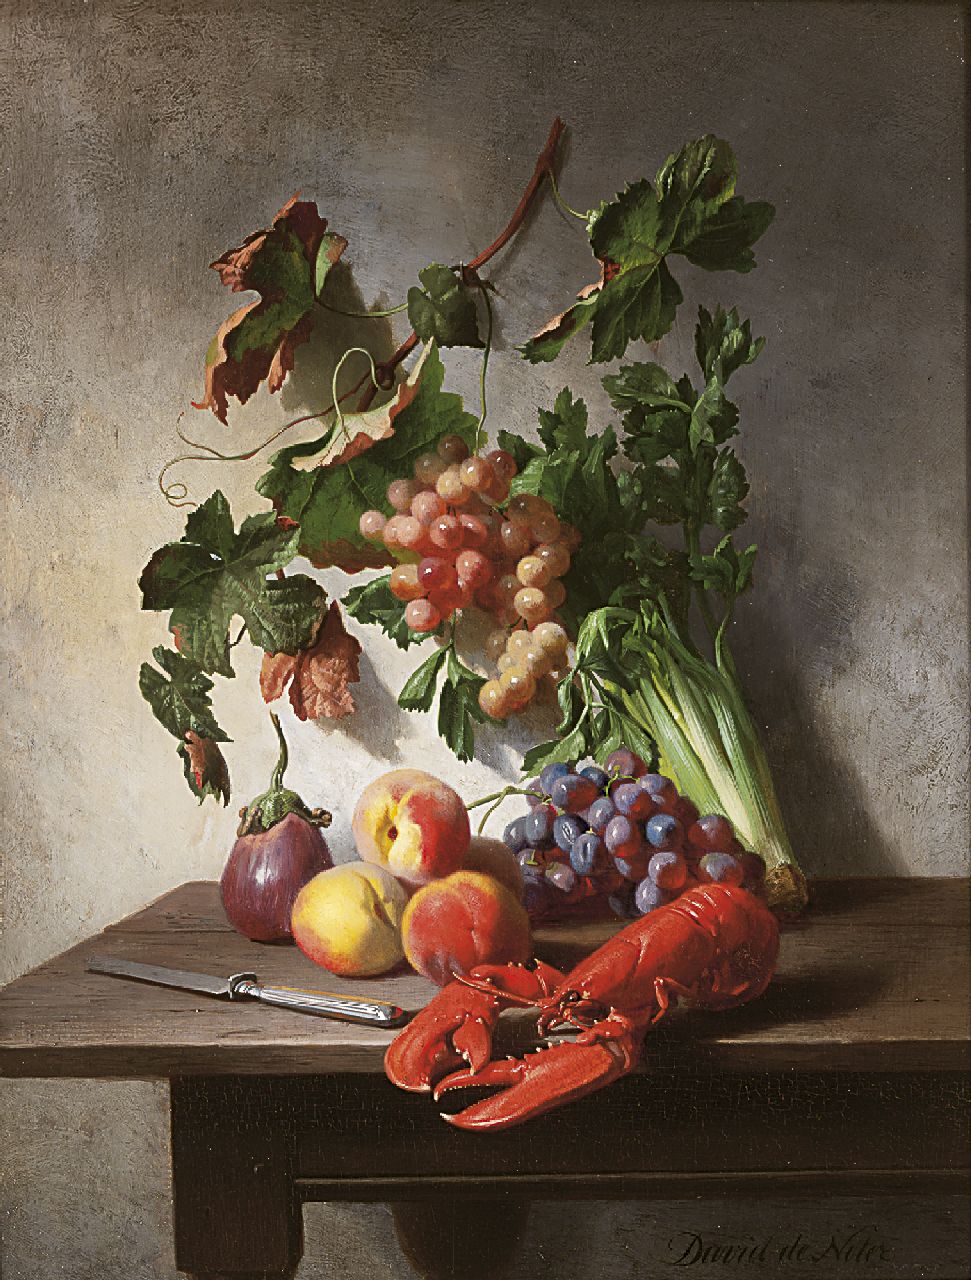 Noter D.E.J. de | 'David' Emile Joseph de Noter, A still life with fruits, vegetables and a lobster, Öl auf Holz 37,0 x 28,3 cm, signed l.r.